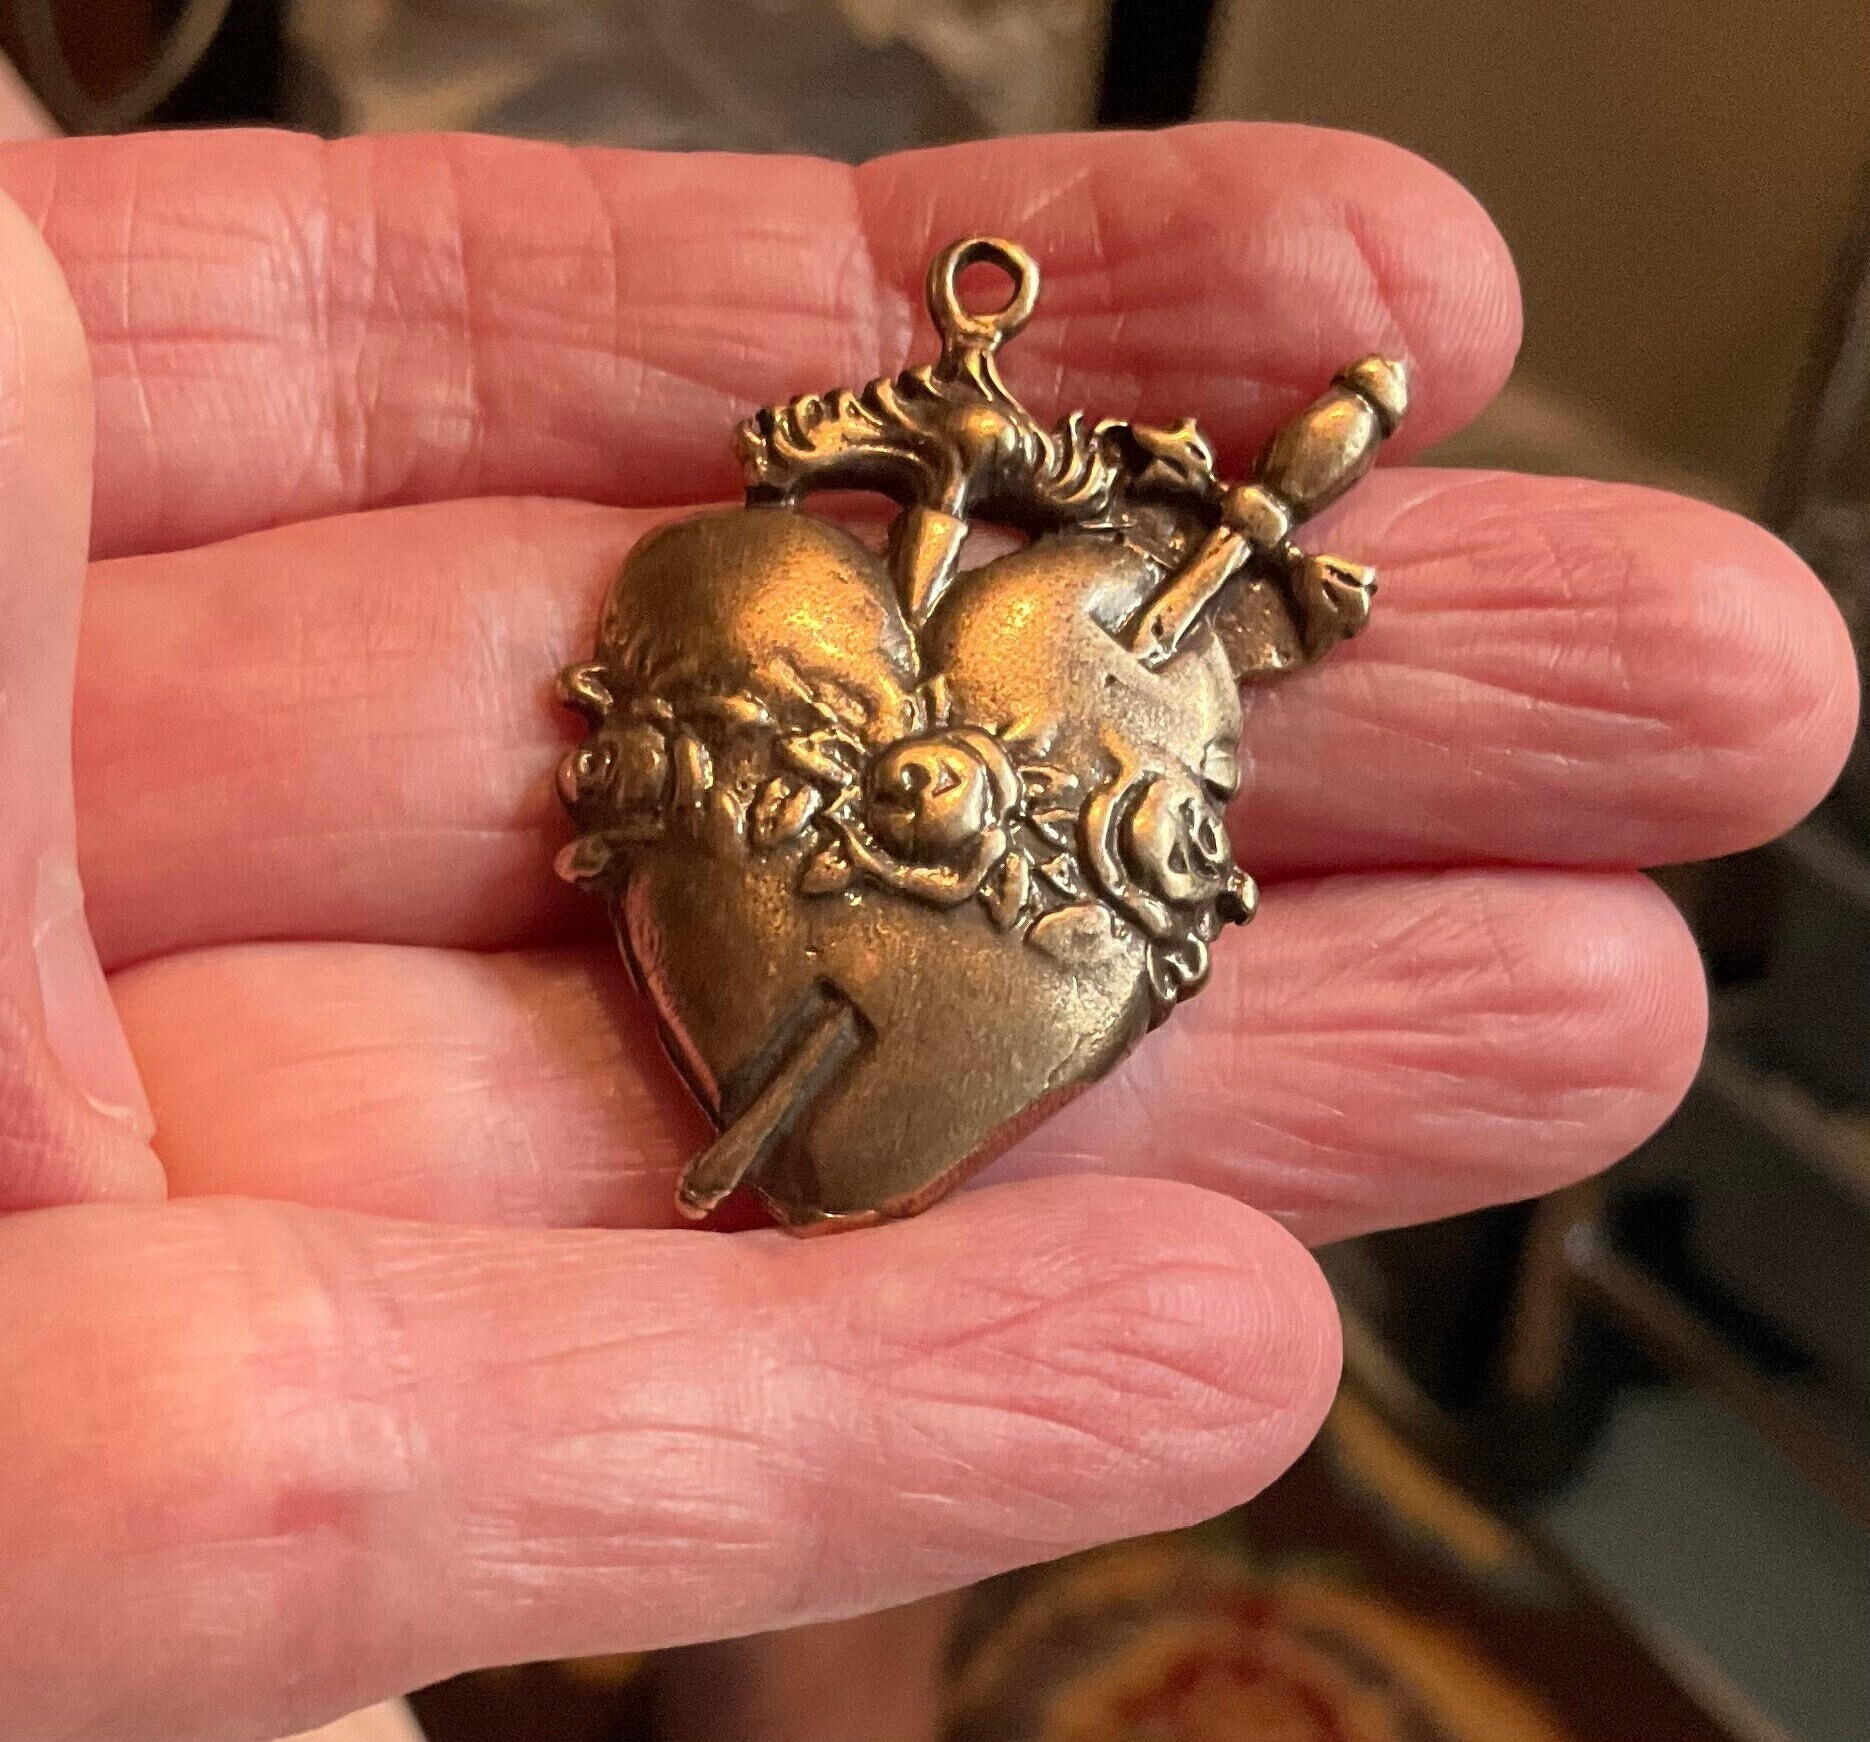 Large Sword-Pierced Heart Necklace